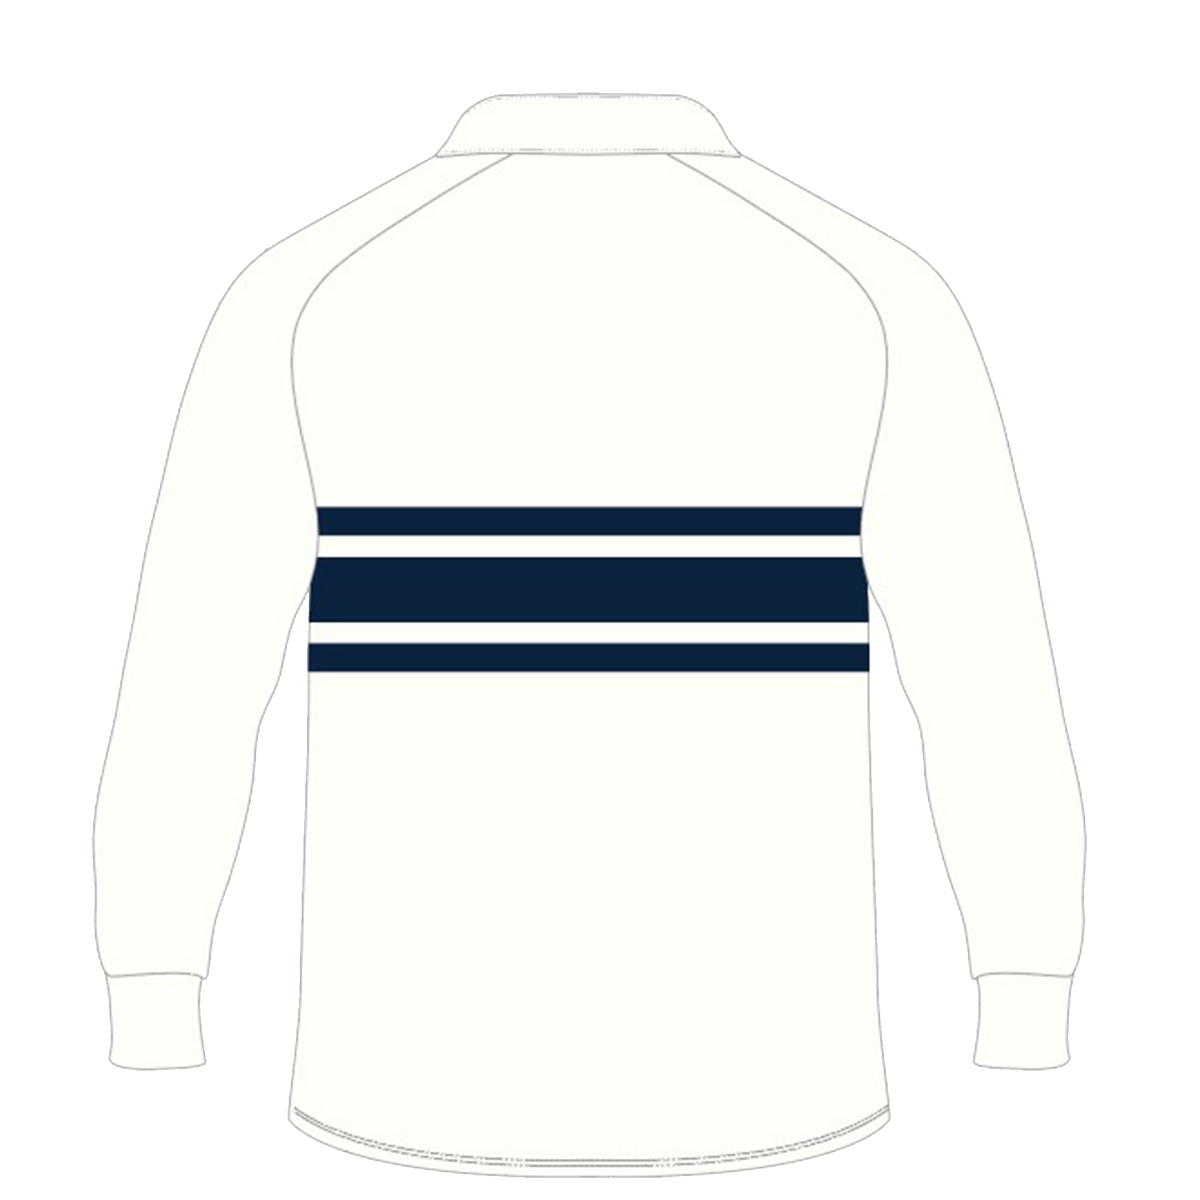 UBOCB Ravens 50th Year Aniversary Canterbury Cotton Rugby Shirt - Adult Unisex Sizing XS-4XL - White/Navy